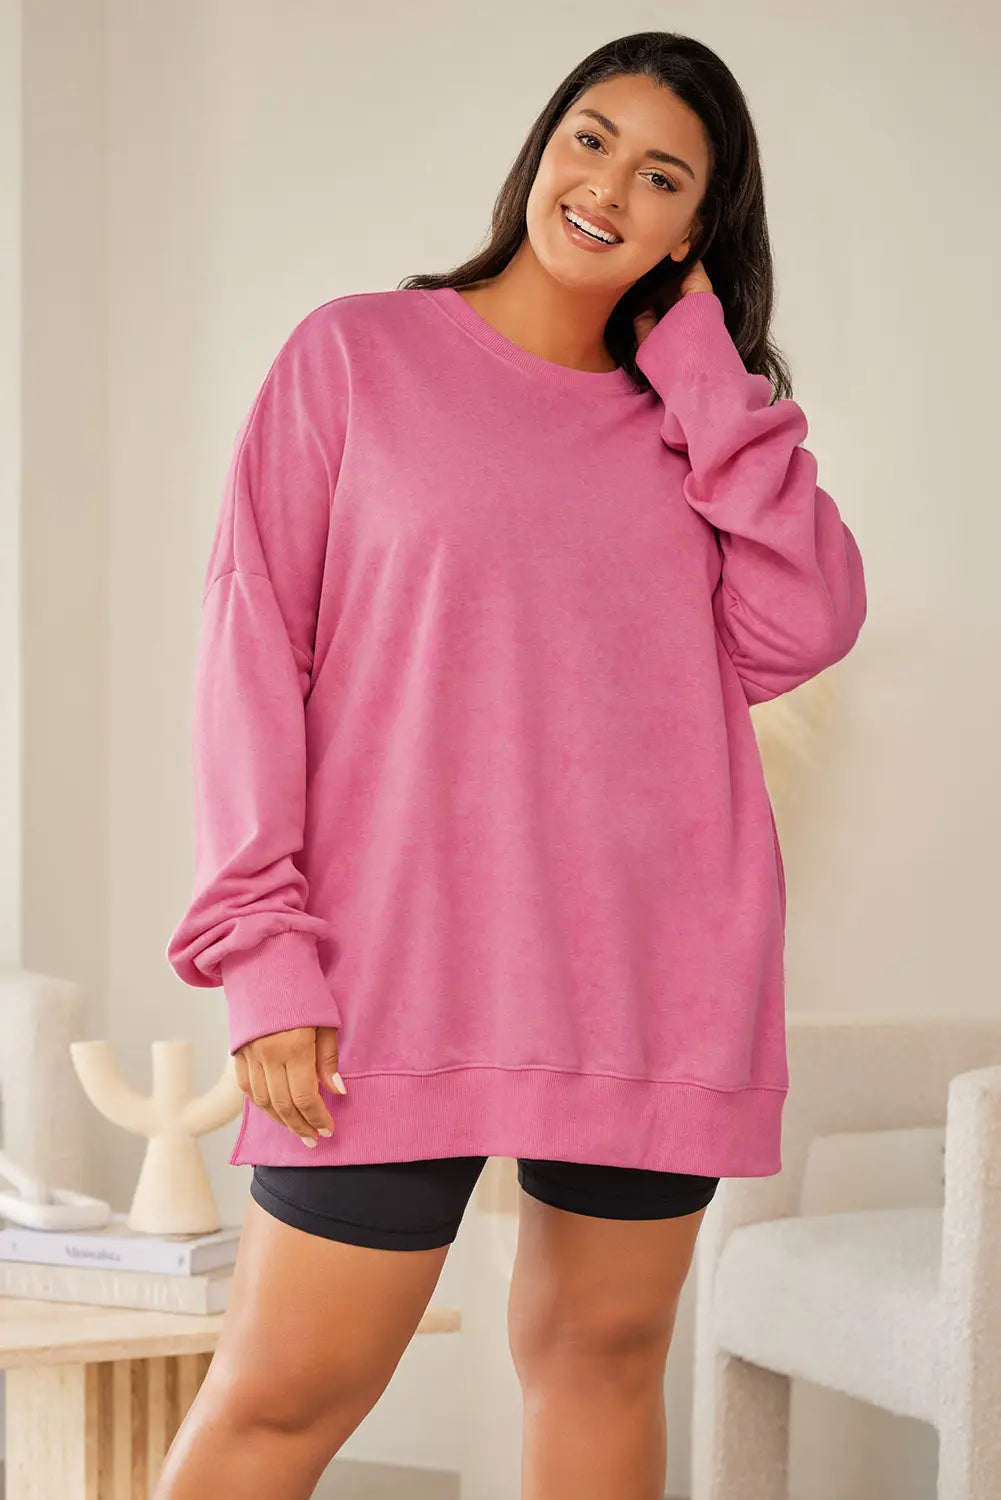 Khaki drop shoulder ribbed trim oversized sweatshirt - pink / 1x / 75% polyester + 25% cotton - tops